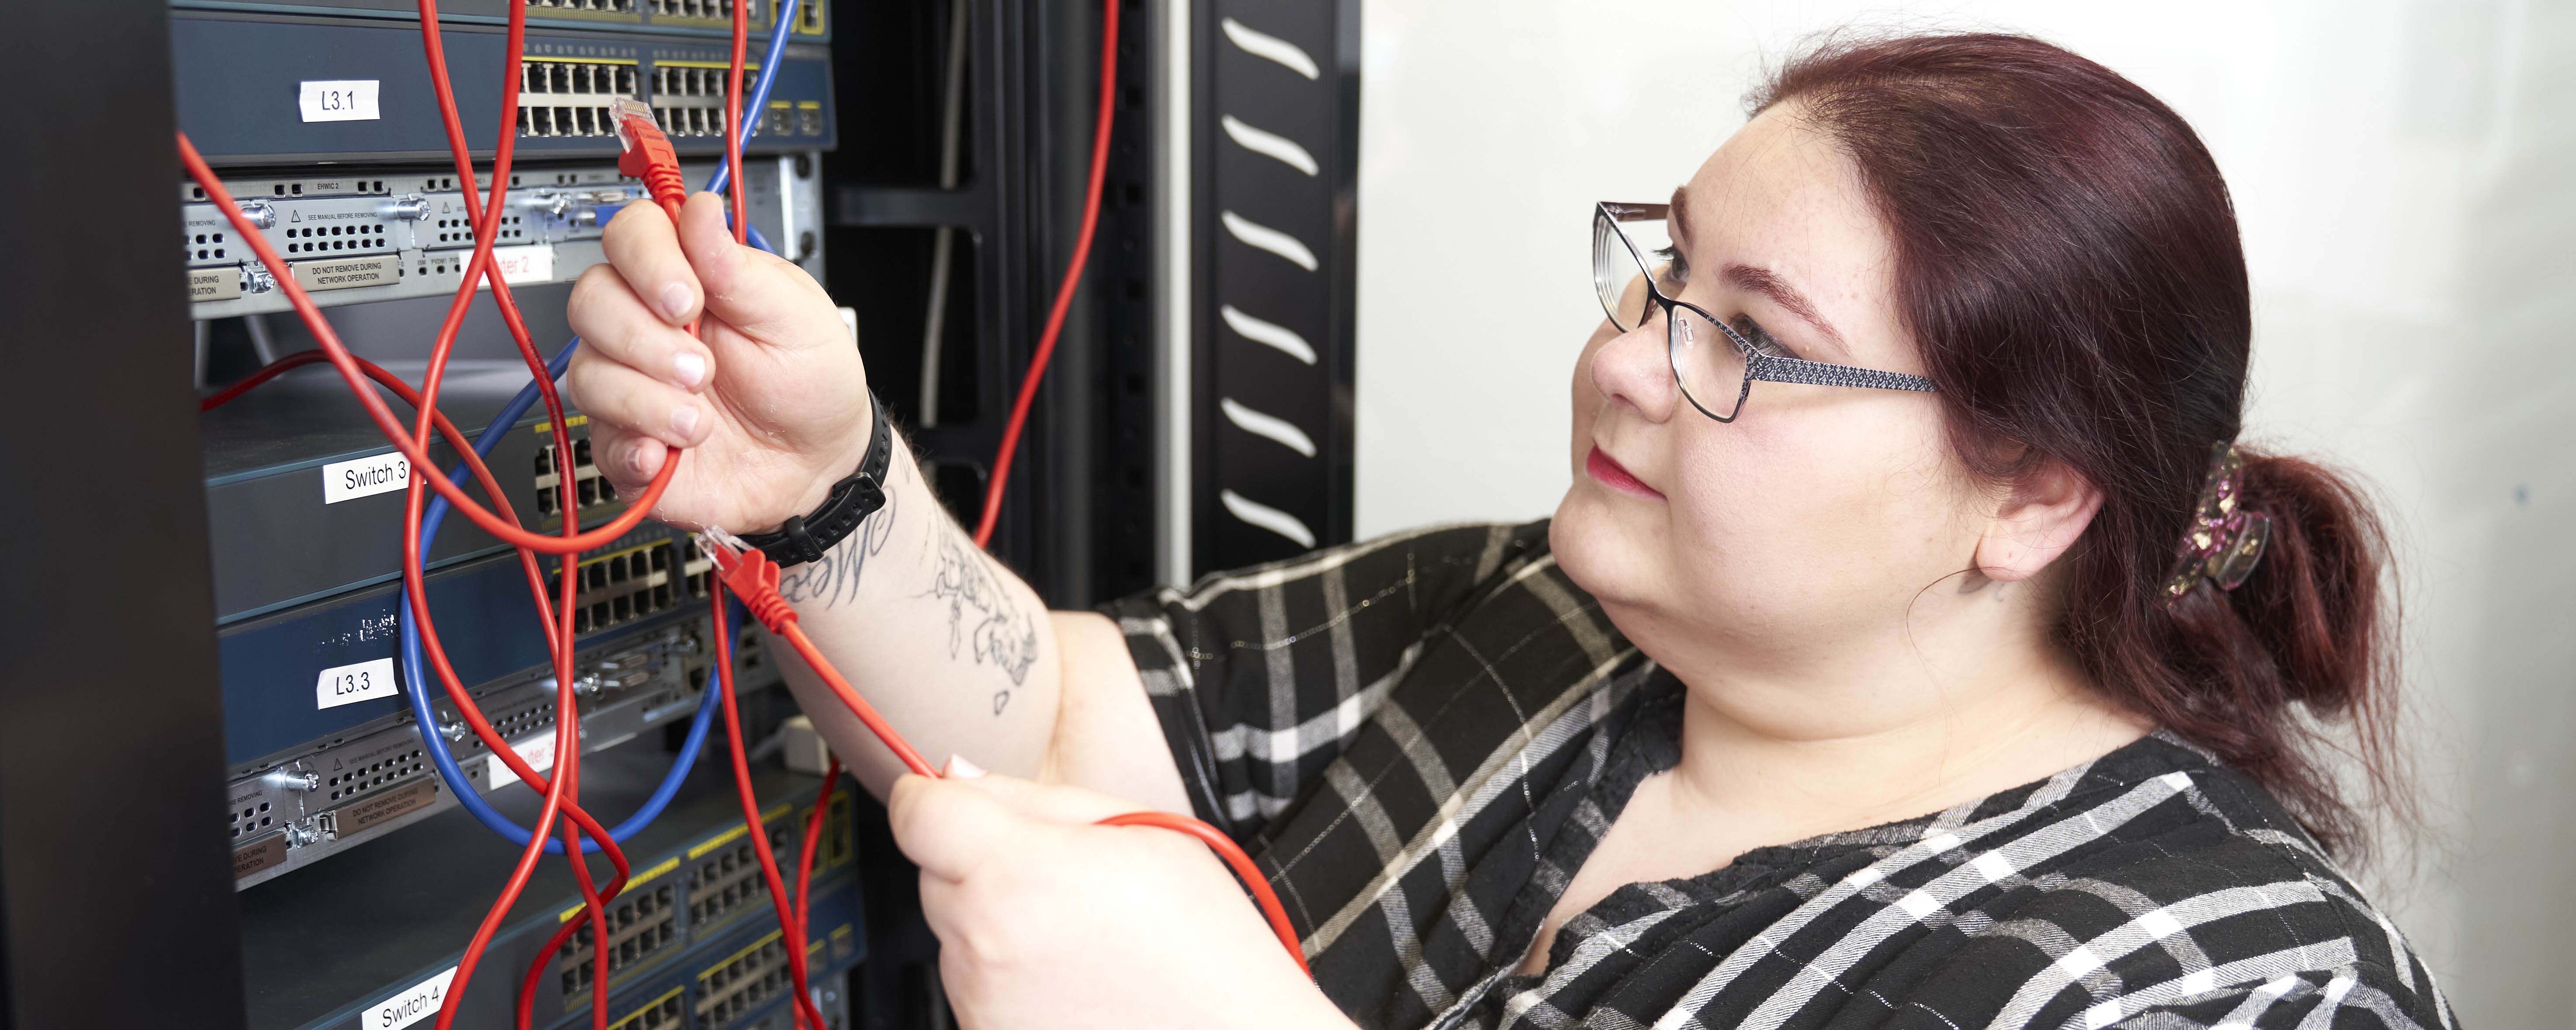 female adult computing student repairing hardware